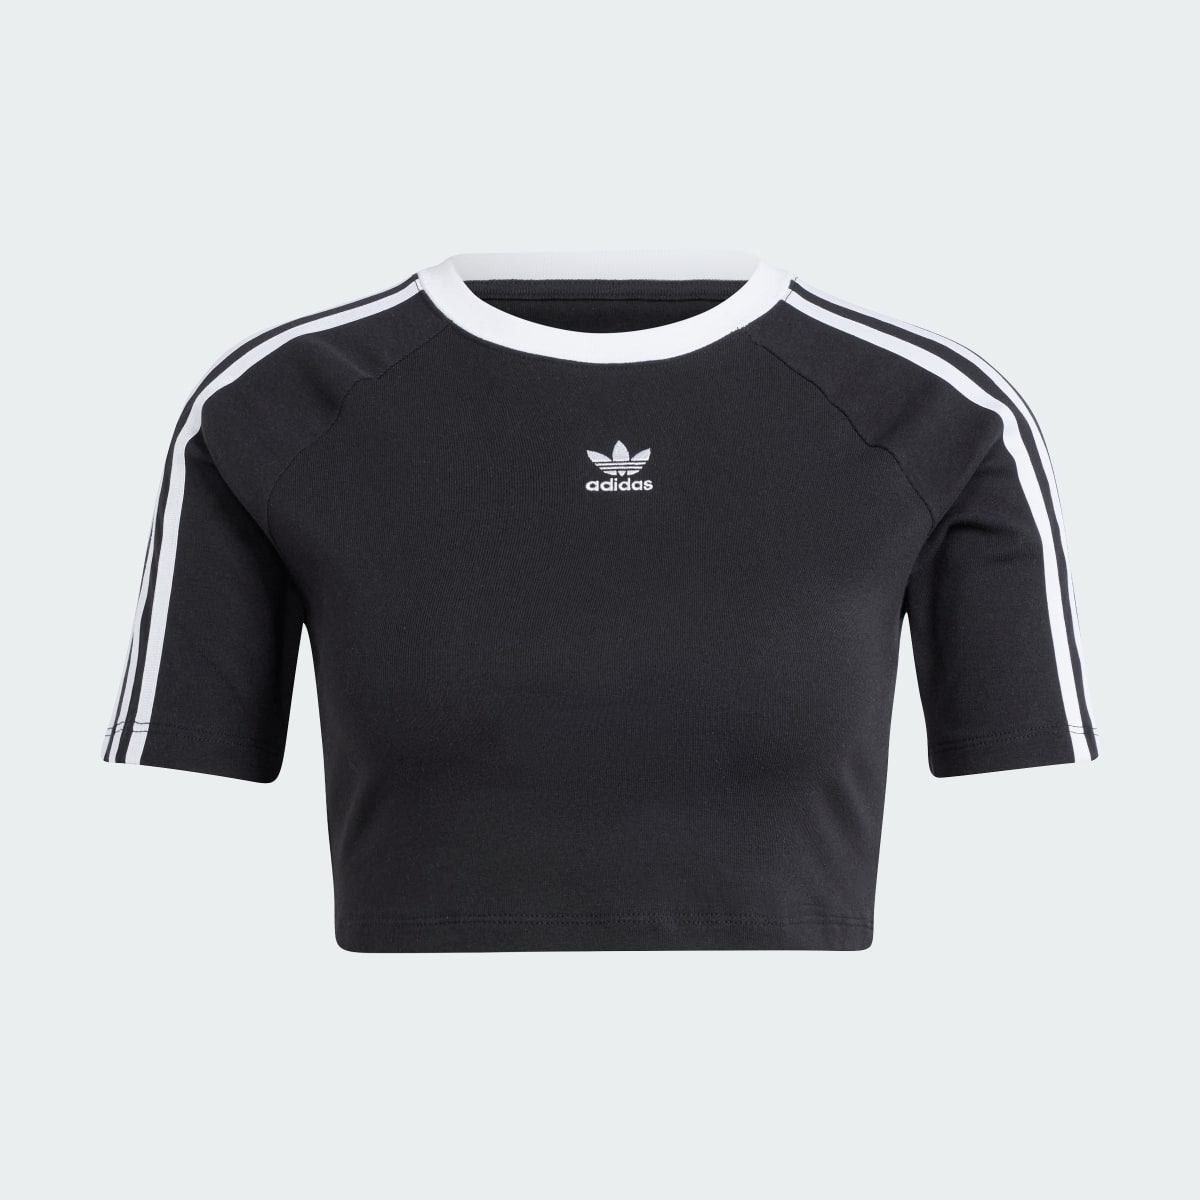 Adidas 3-Stripes Baby T-Shirt. 5